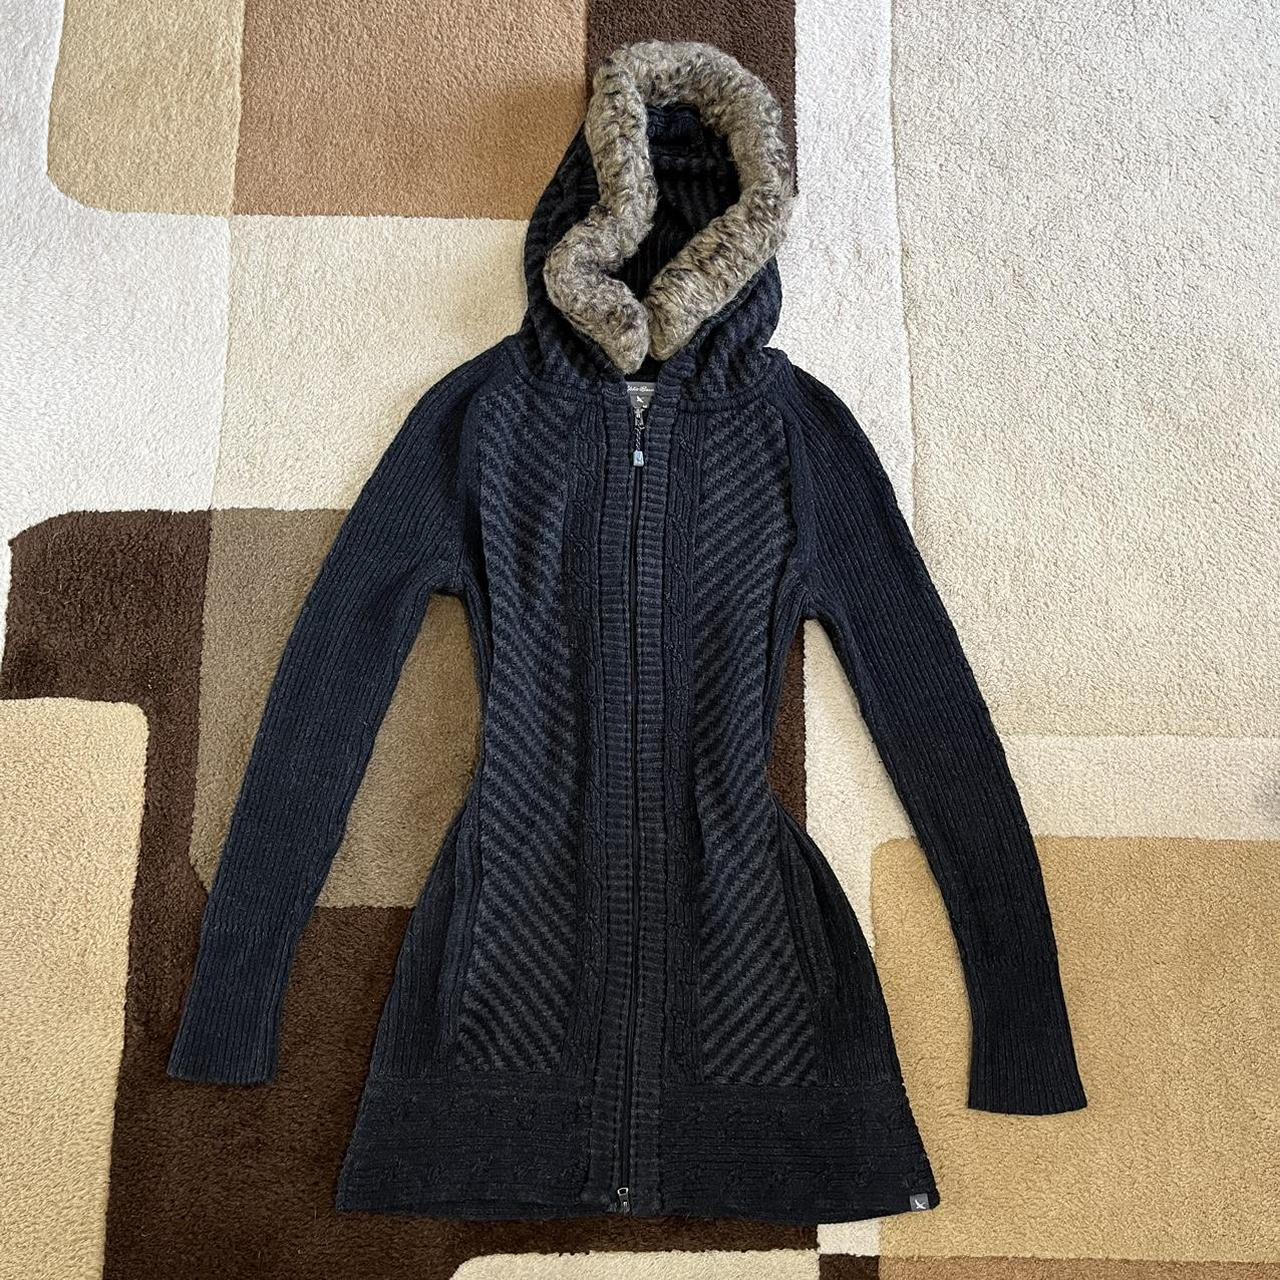 Grey Fur Trimmed Sweater Dress Zip-Up Size M Super... - Depop